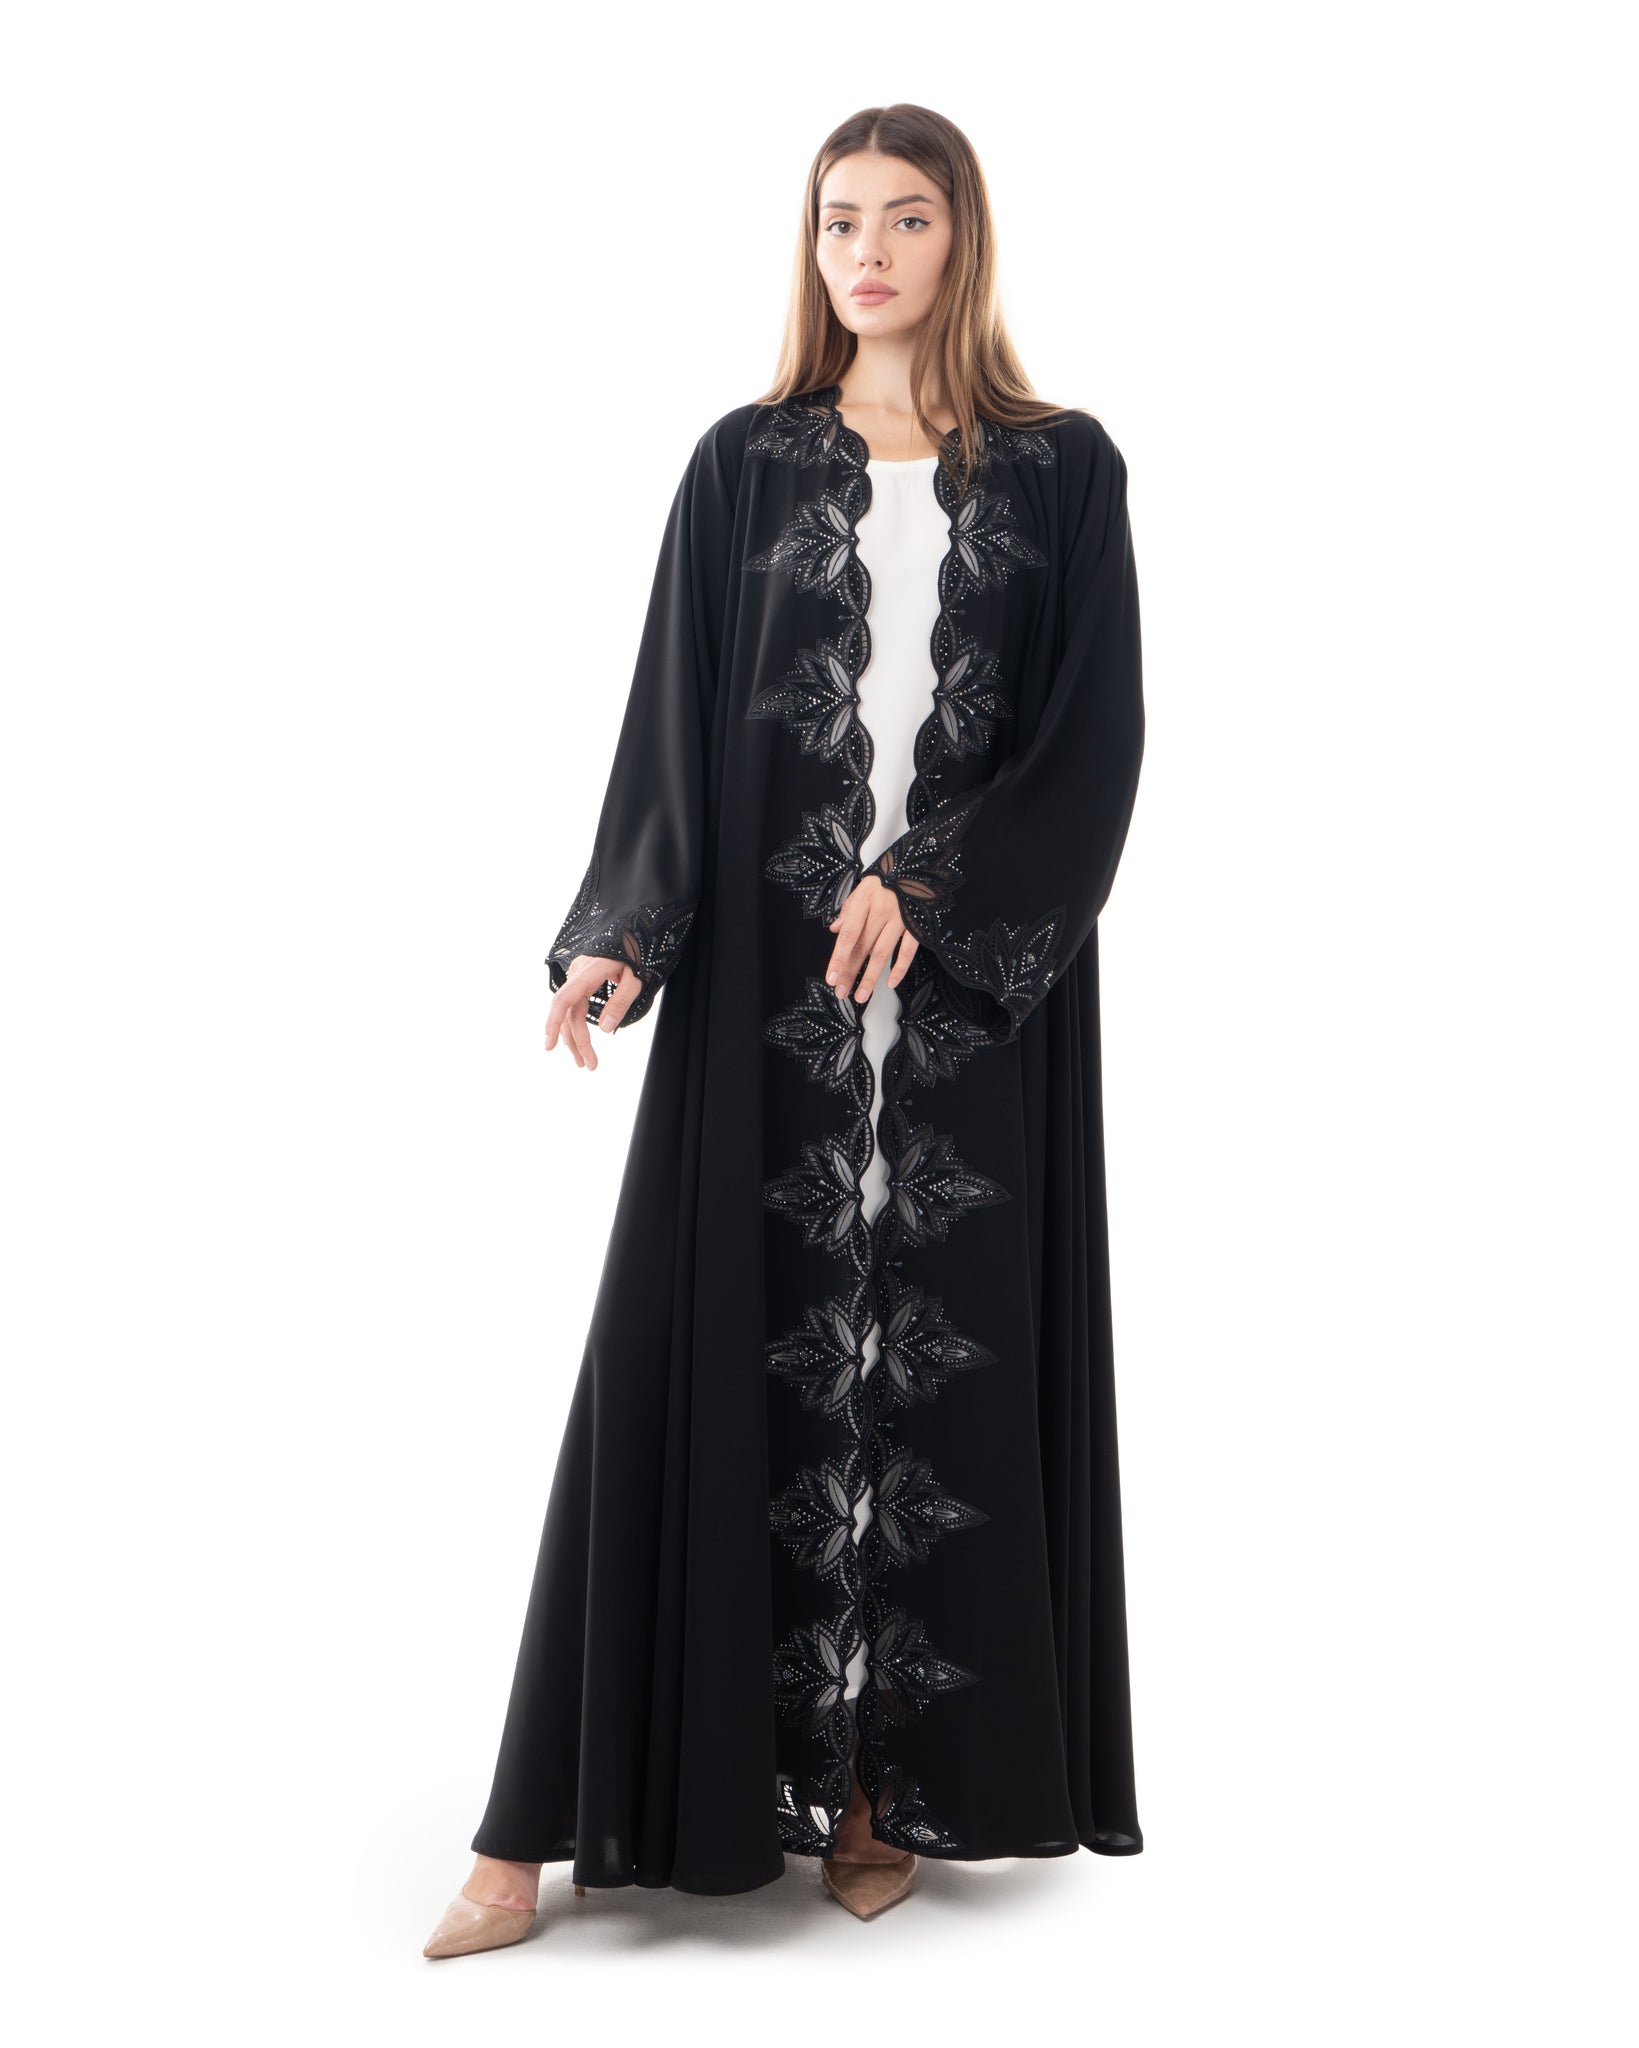 Hanayen Black Embroidered Abaya with Intricate Floral Design